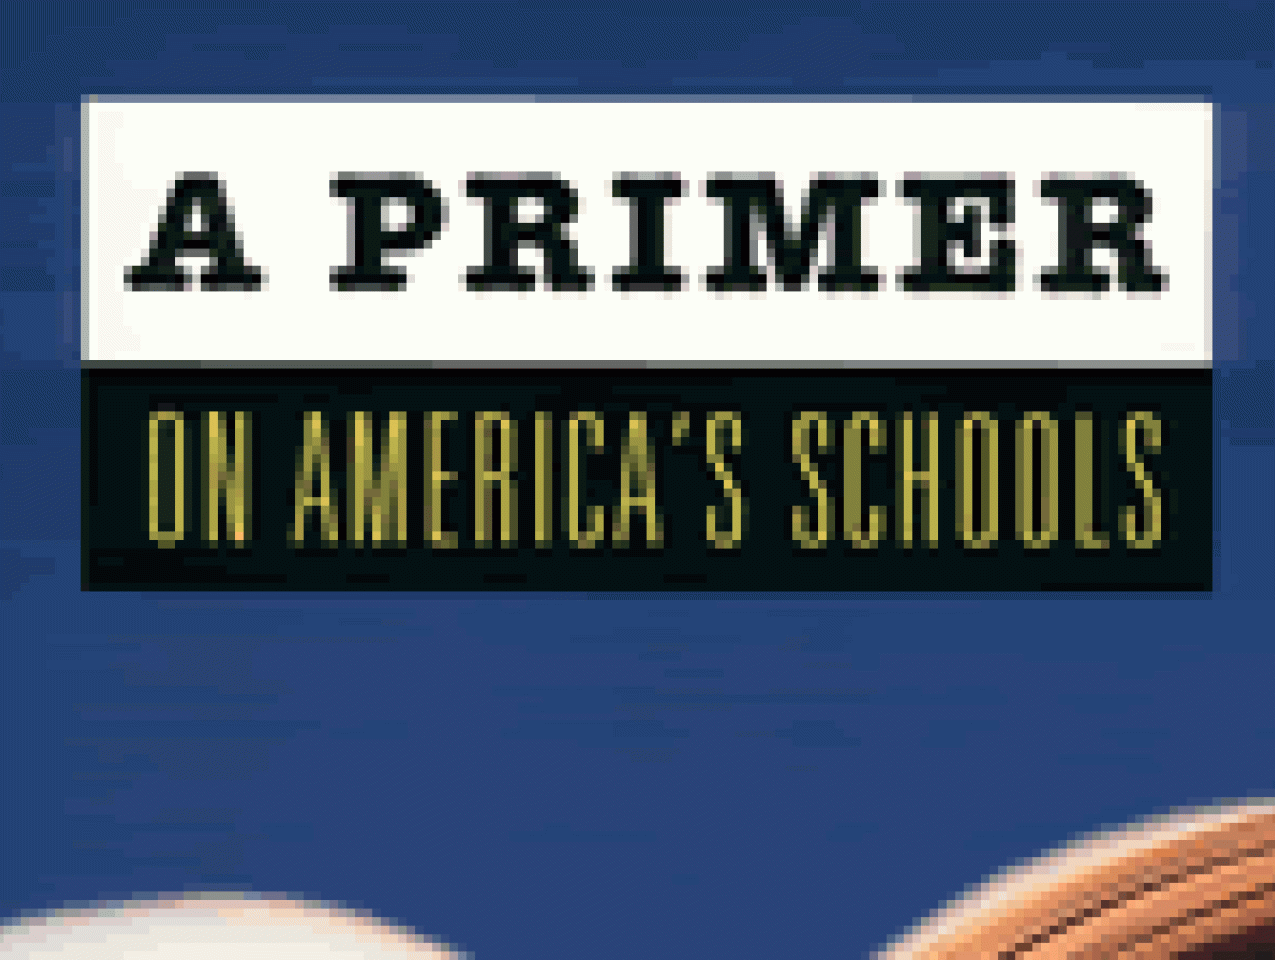 A Primer on America's Schools